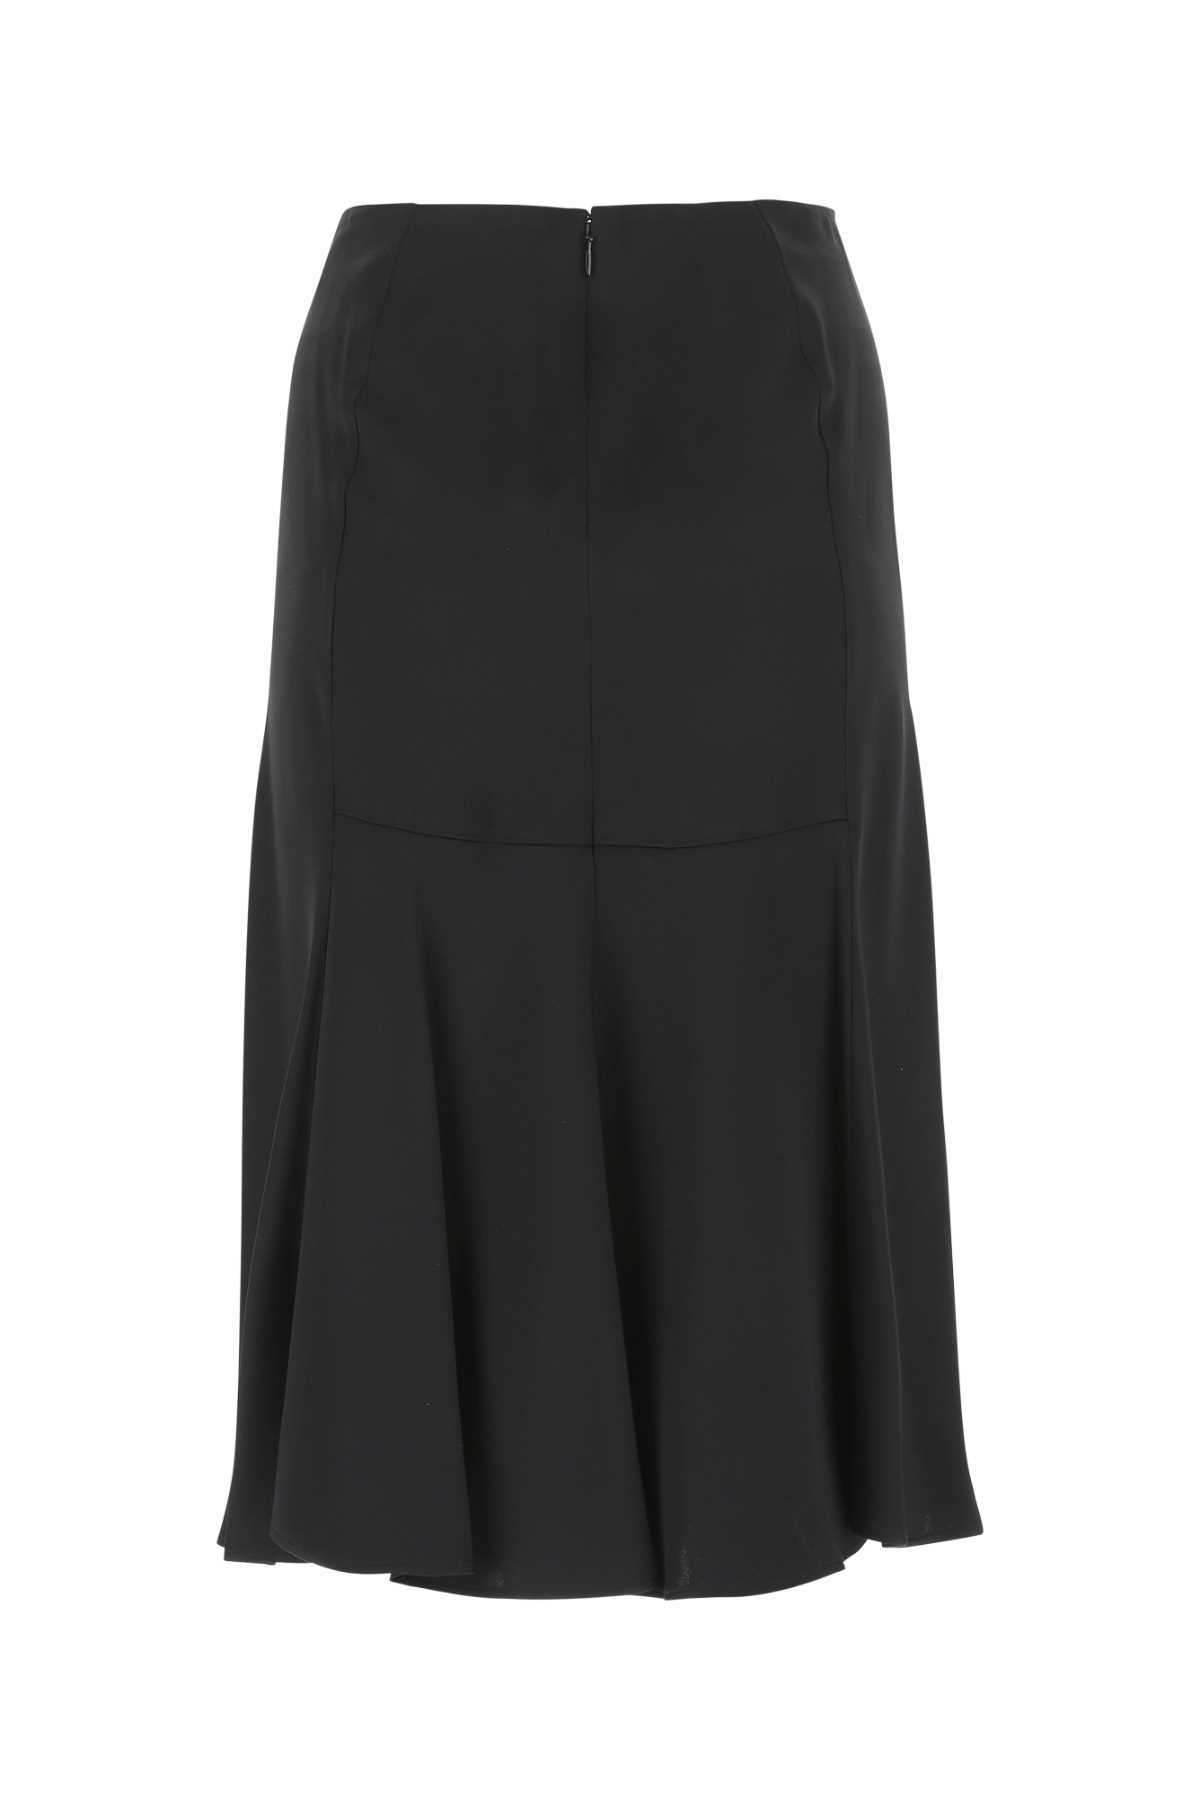 Stella Mccartney Black Satin Skirt In 1000